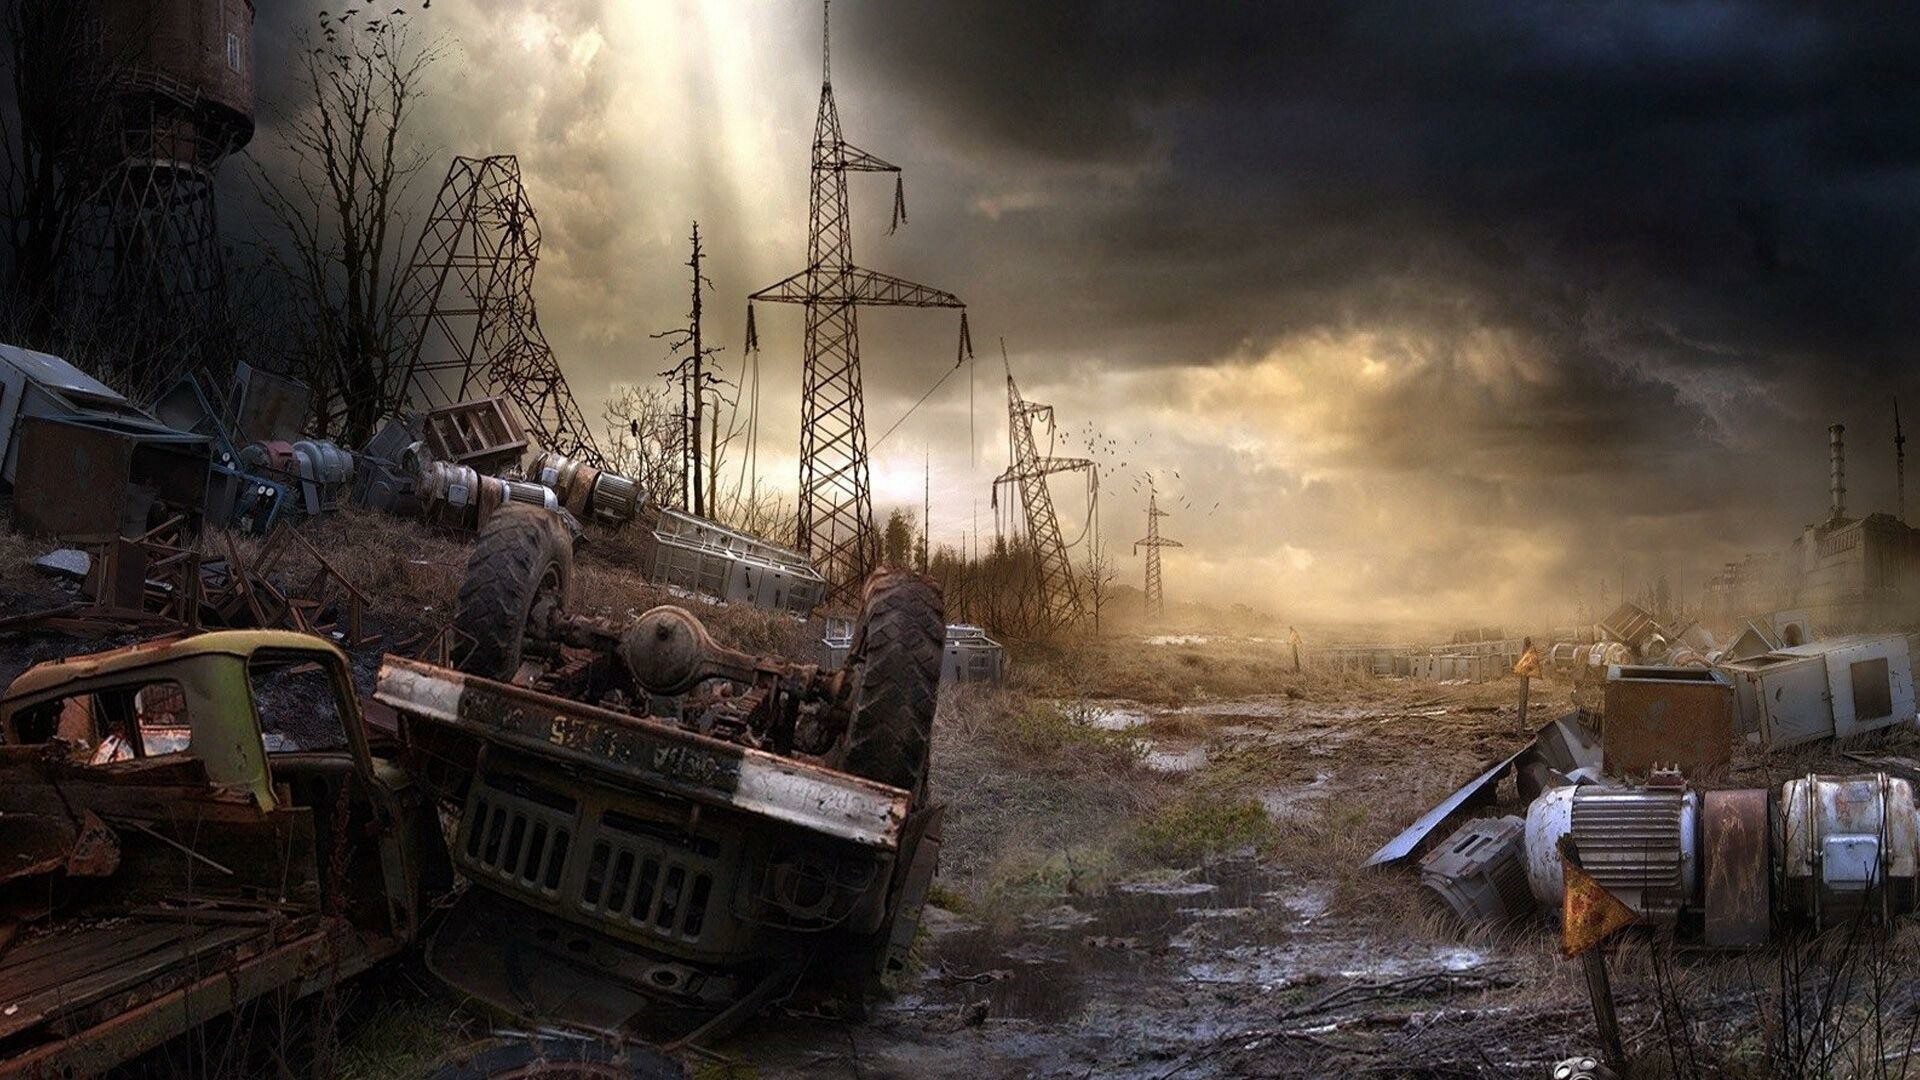 Post-apocalypse: Abandoned city, Destruction, Destroyed vehicles. 1920x1080 Full HD Wallpaper.